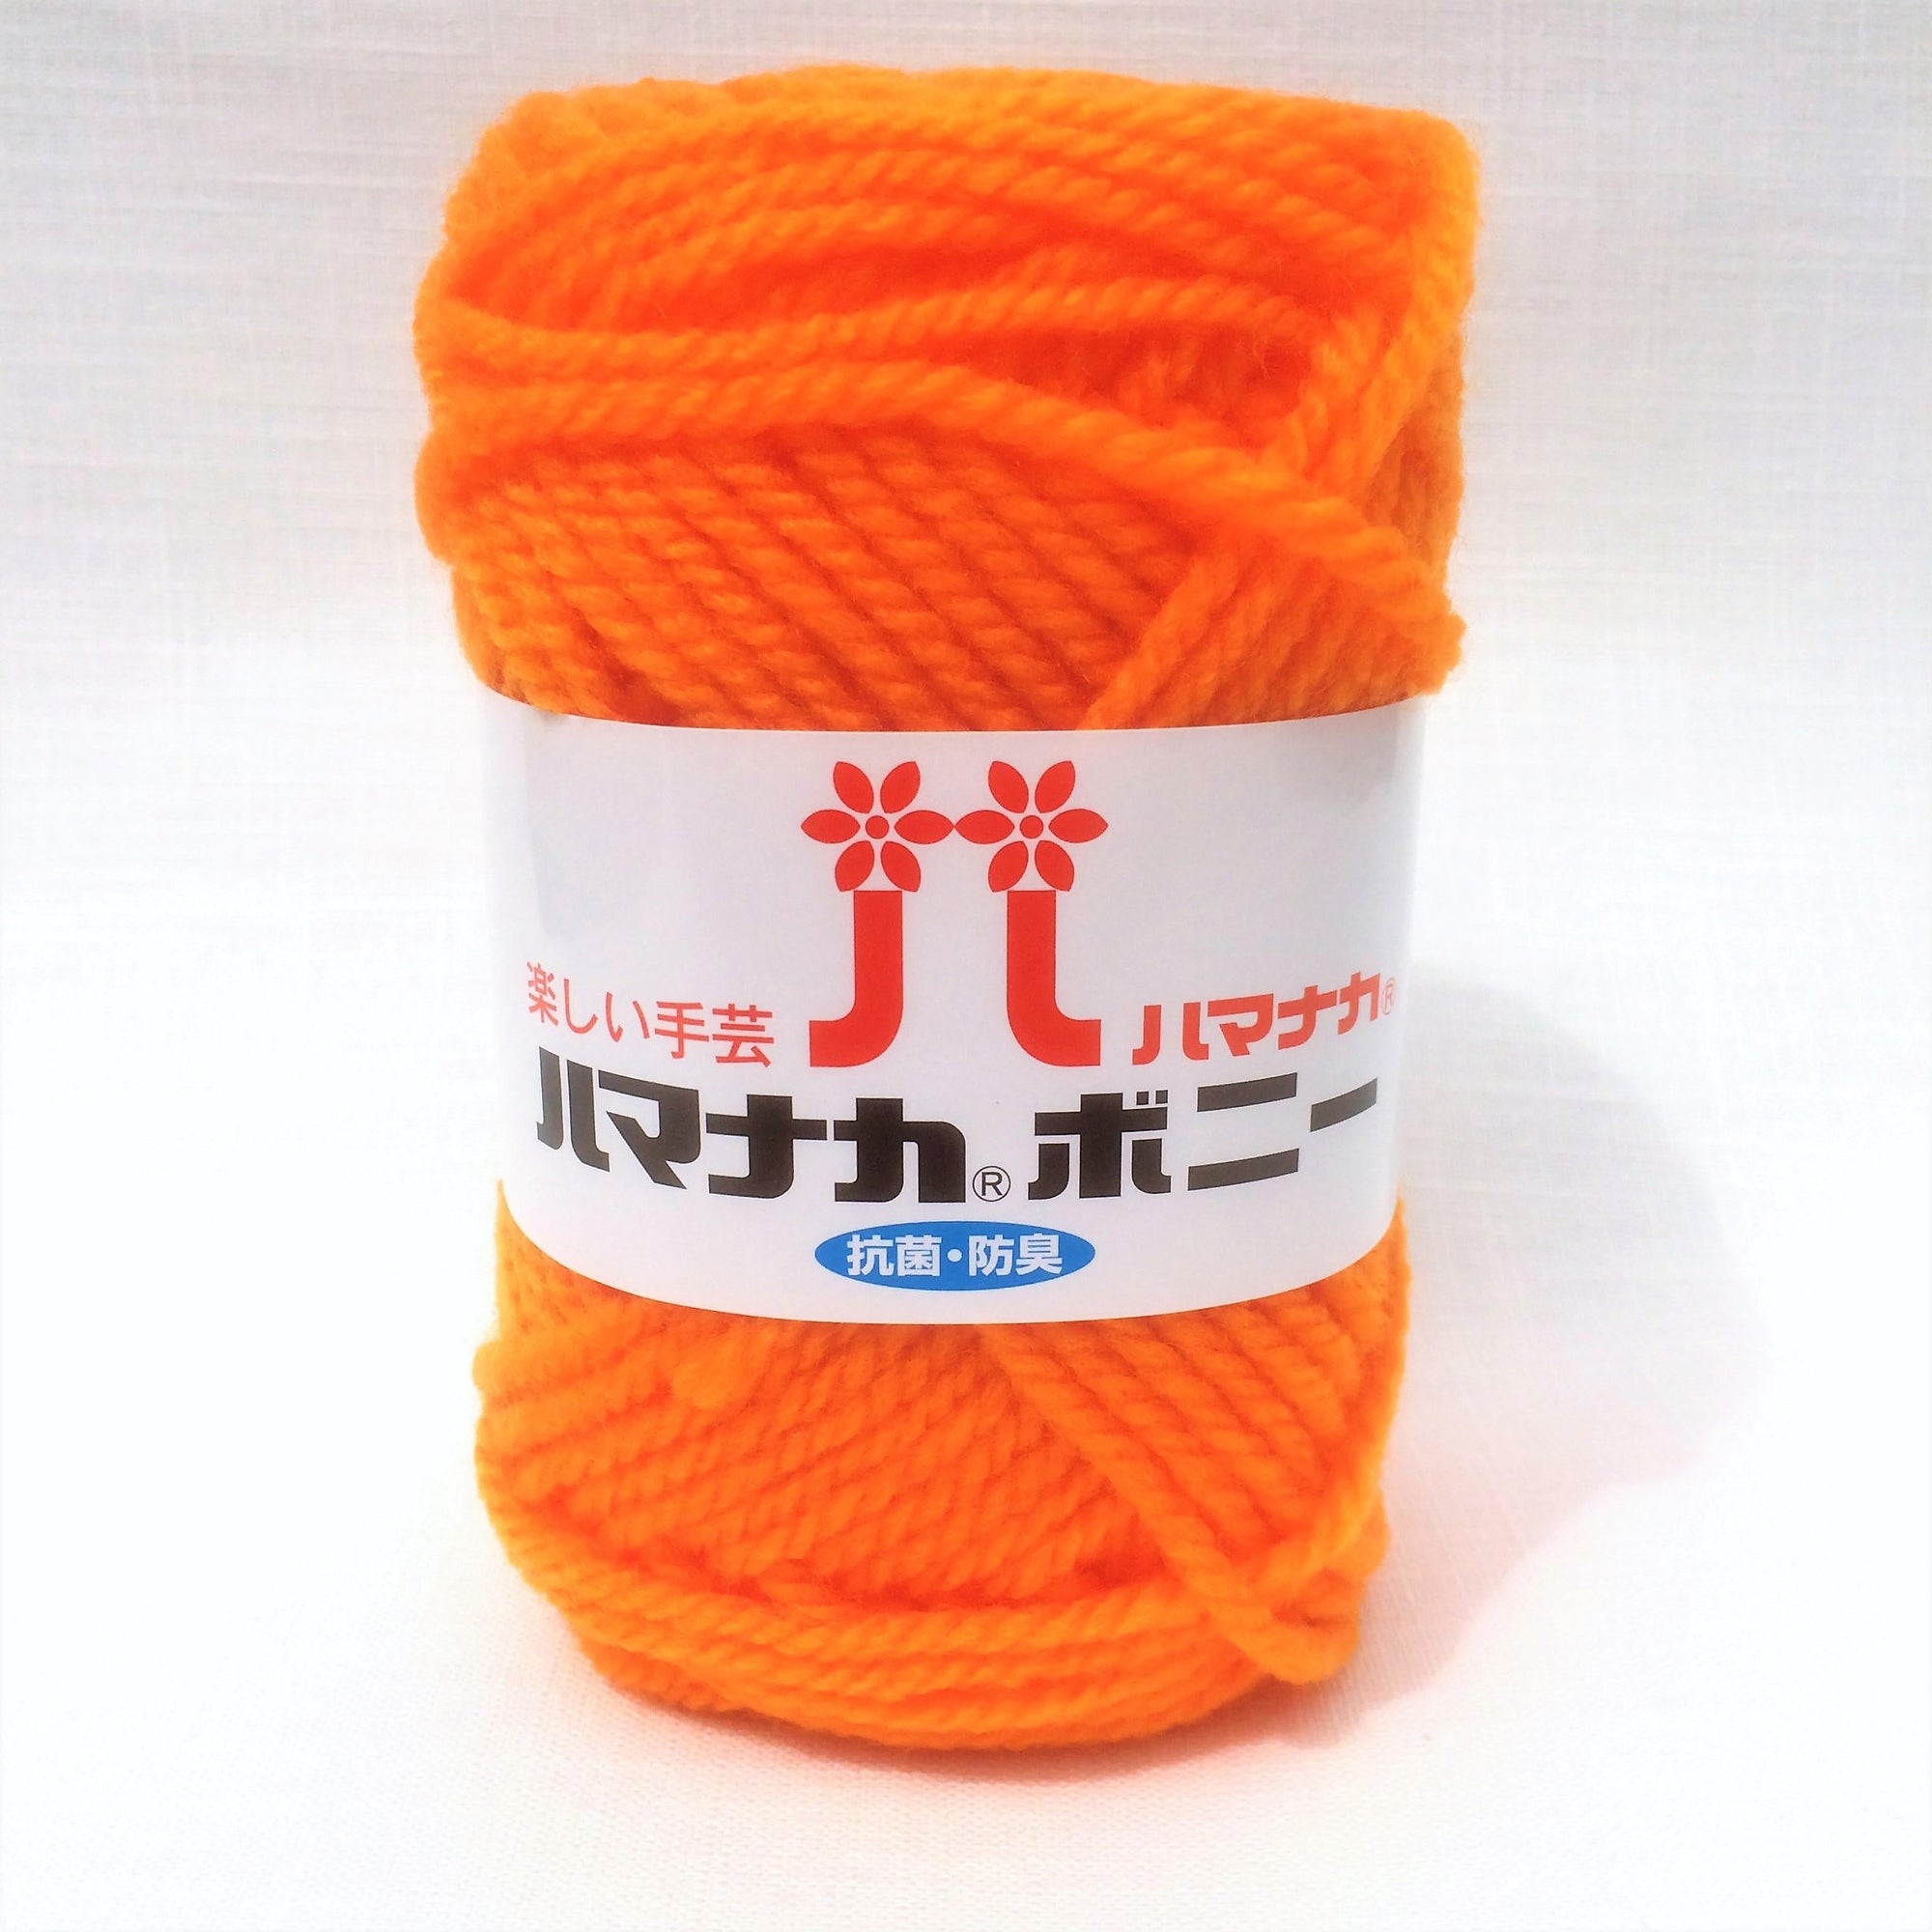 Hamanaka Bonny Yarn- Orange